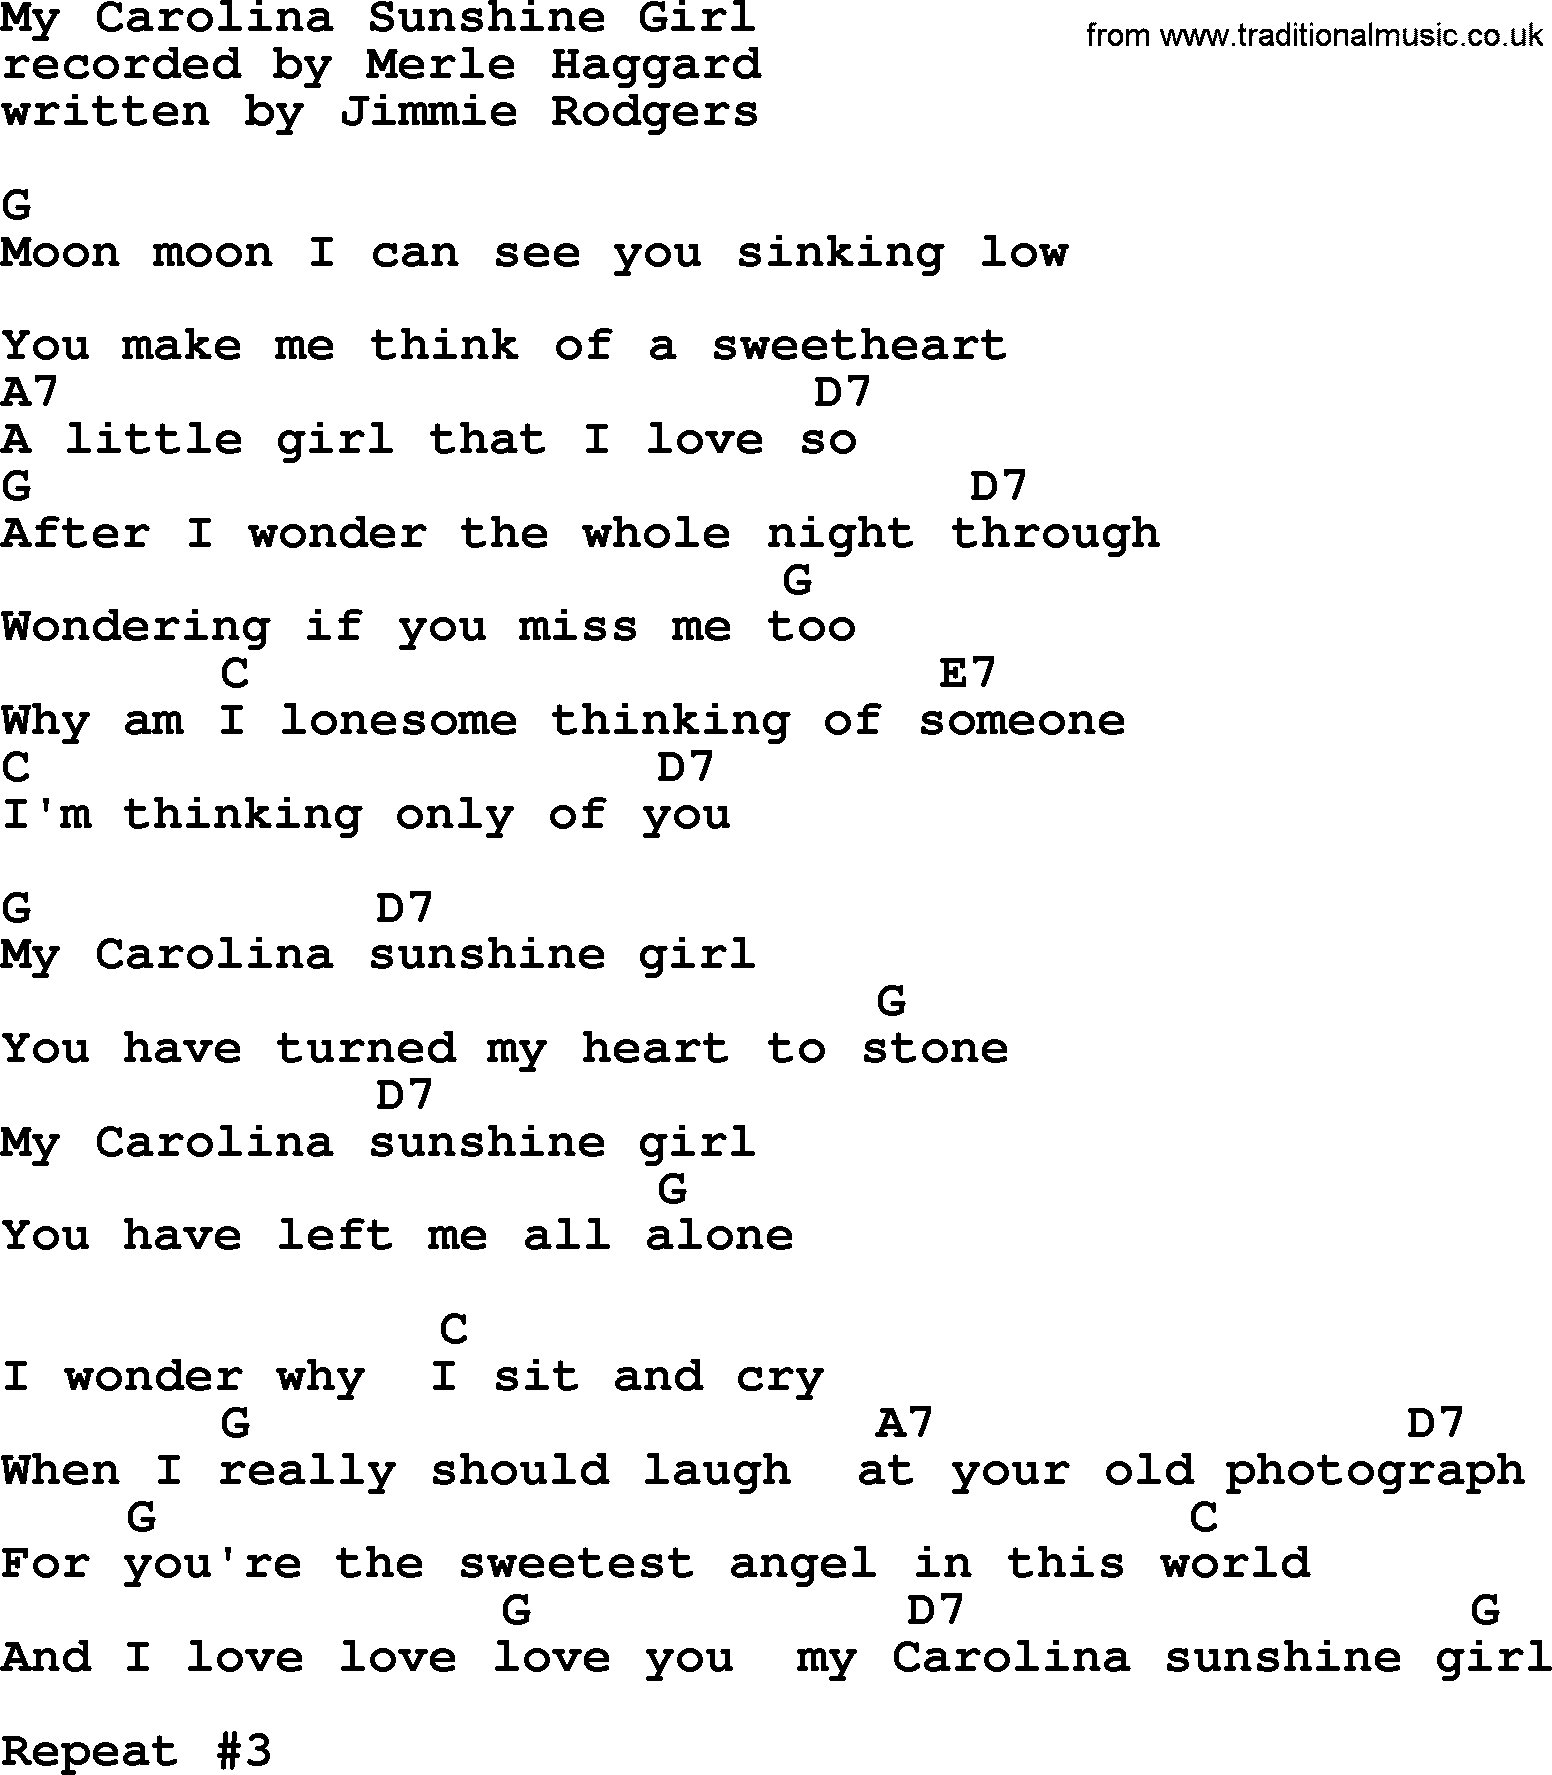 Merle Haggard song: My Carolina Sunshine Girl, lyrics and chords